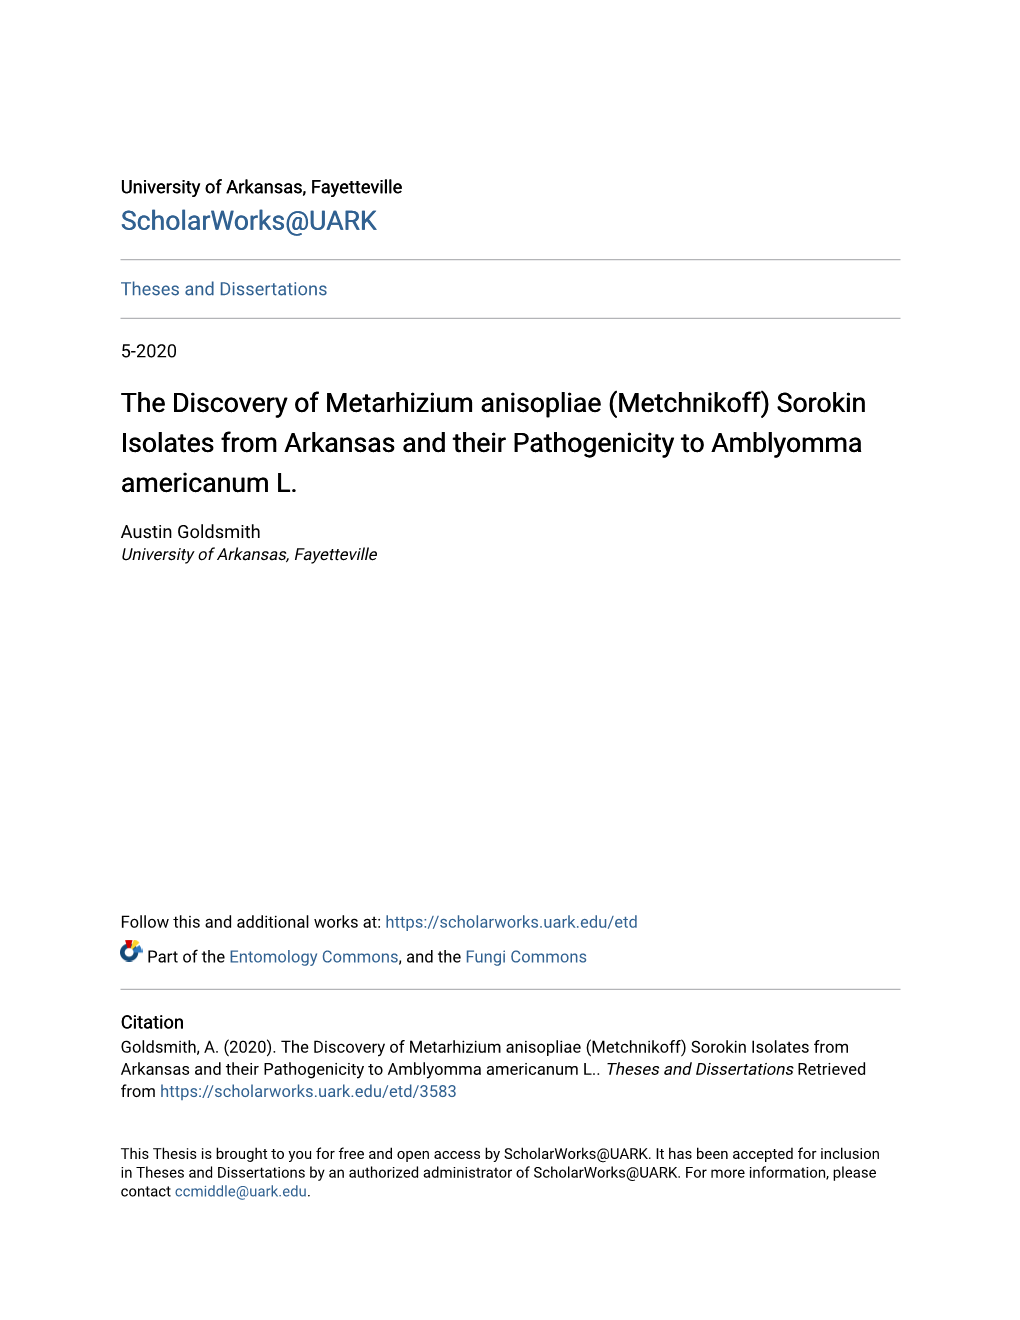 The Discovery of Metarhizium Anisopliae (Metchnikoff) Sorokin Isolates from Arkansas and Their Pathogenicity to Amblyomma Americanum L